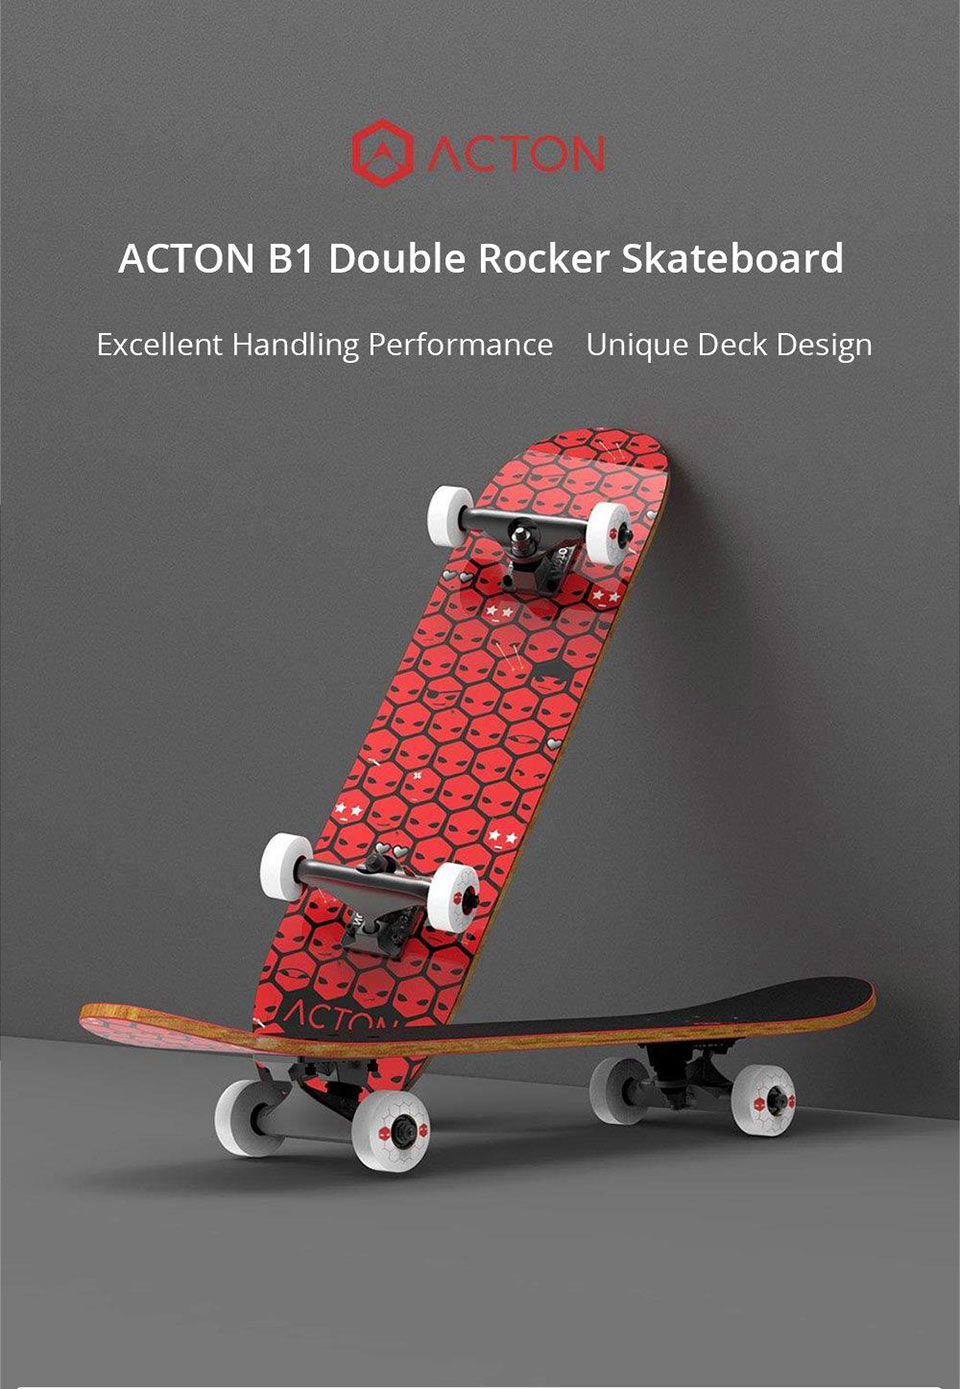 Acton B1 Double Rocker классный скейтборд